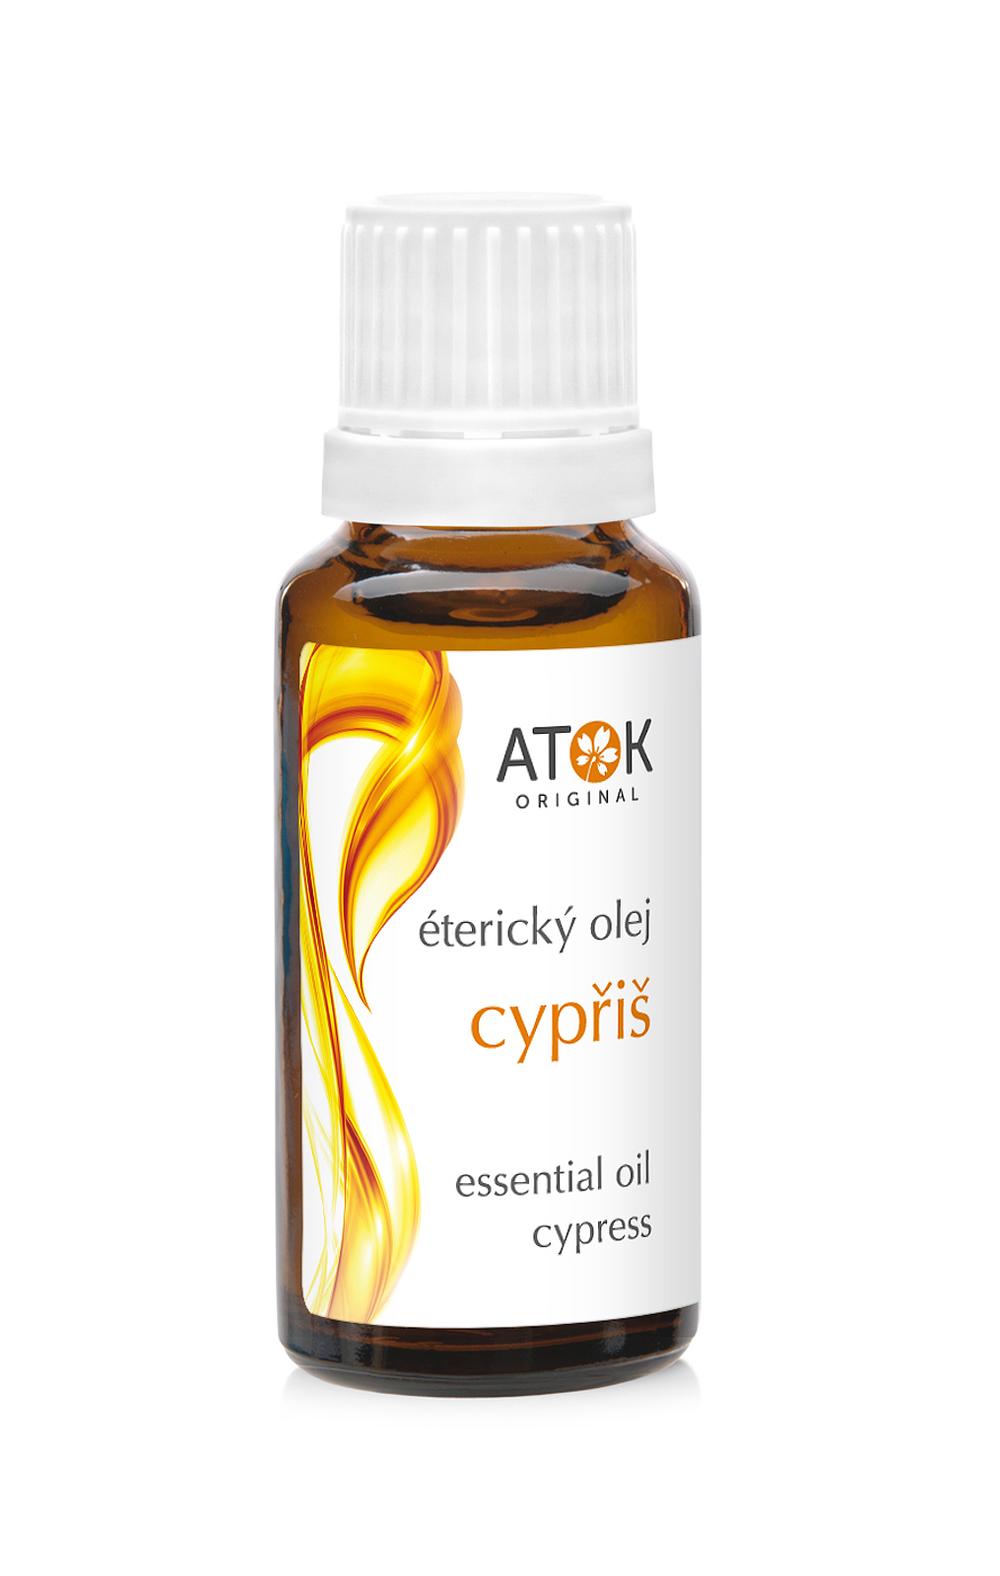 Éterický olej Cyprus - Original ATOK Obsah: 20 ml